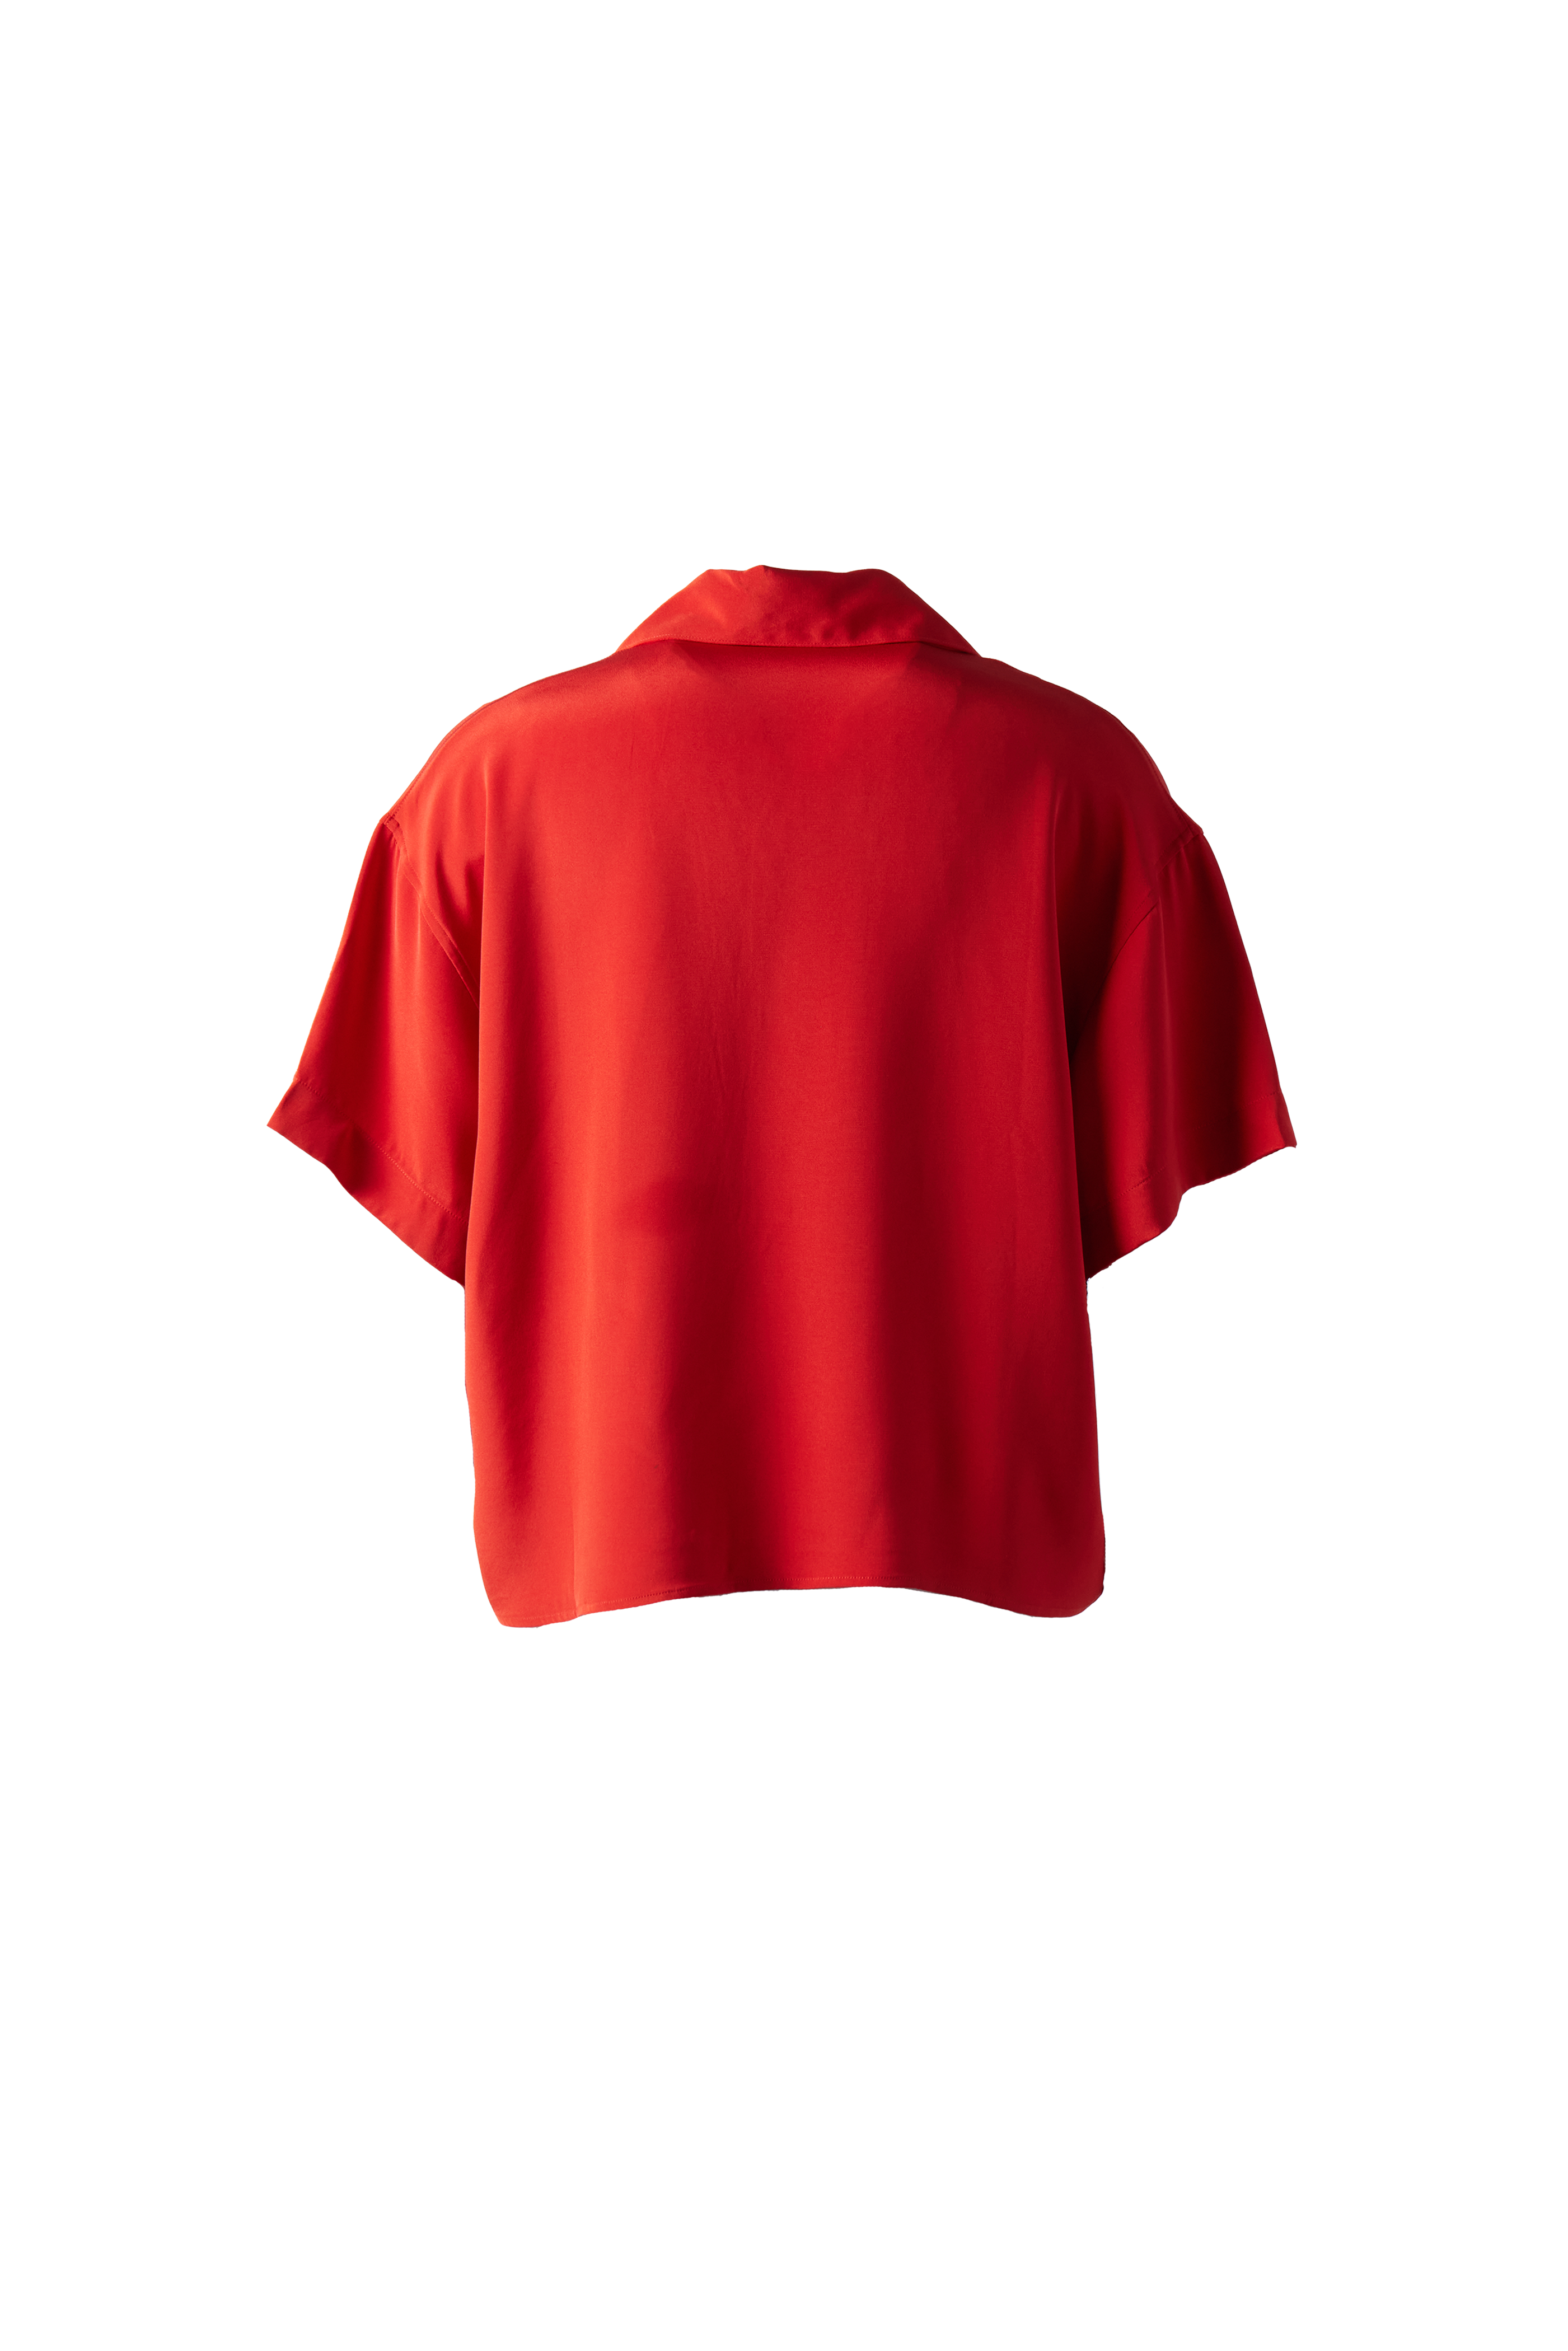 GLASS CYPRESS - Inferno Silk Shirt product image